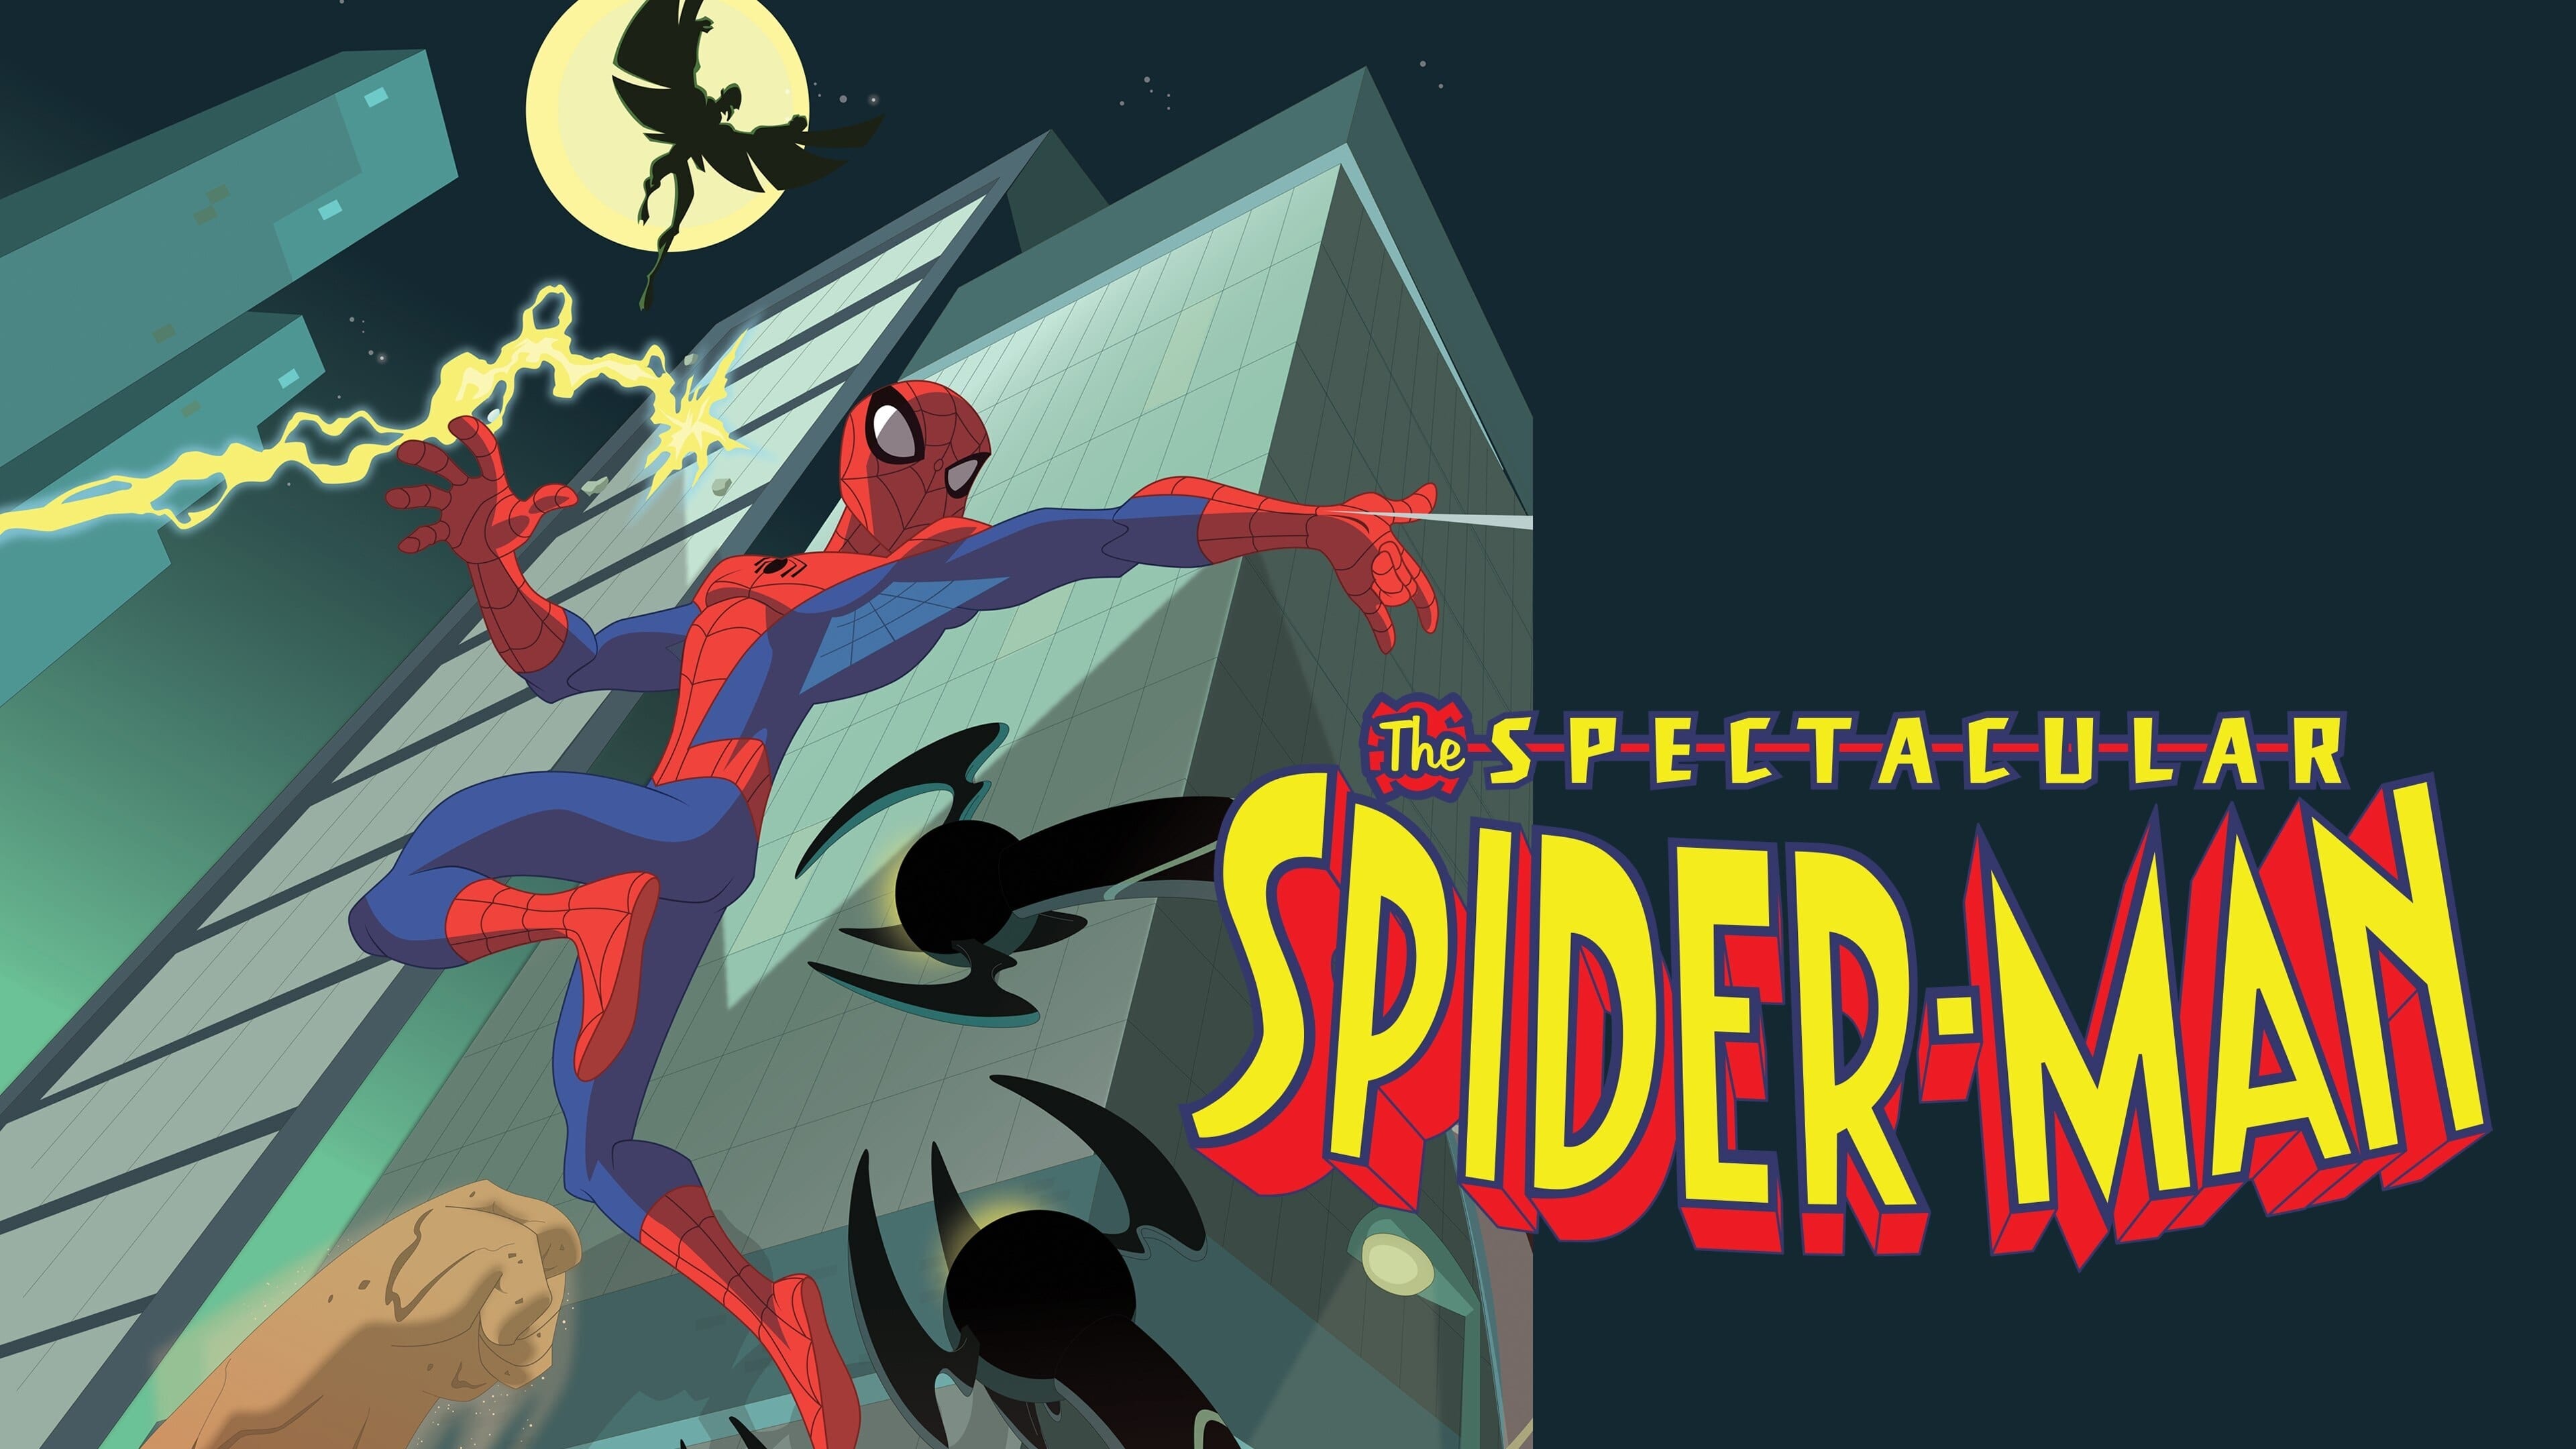 The Spectacular Spider Man 4k Ultra HD Wallpaper